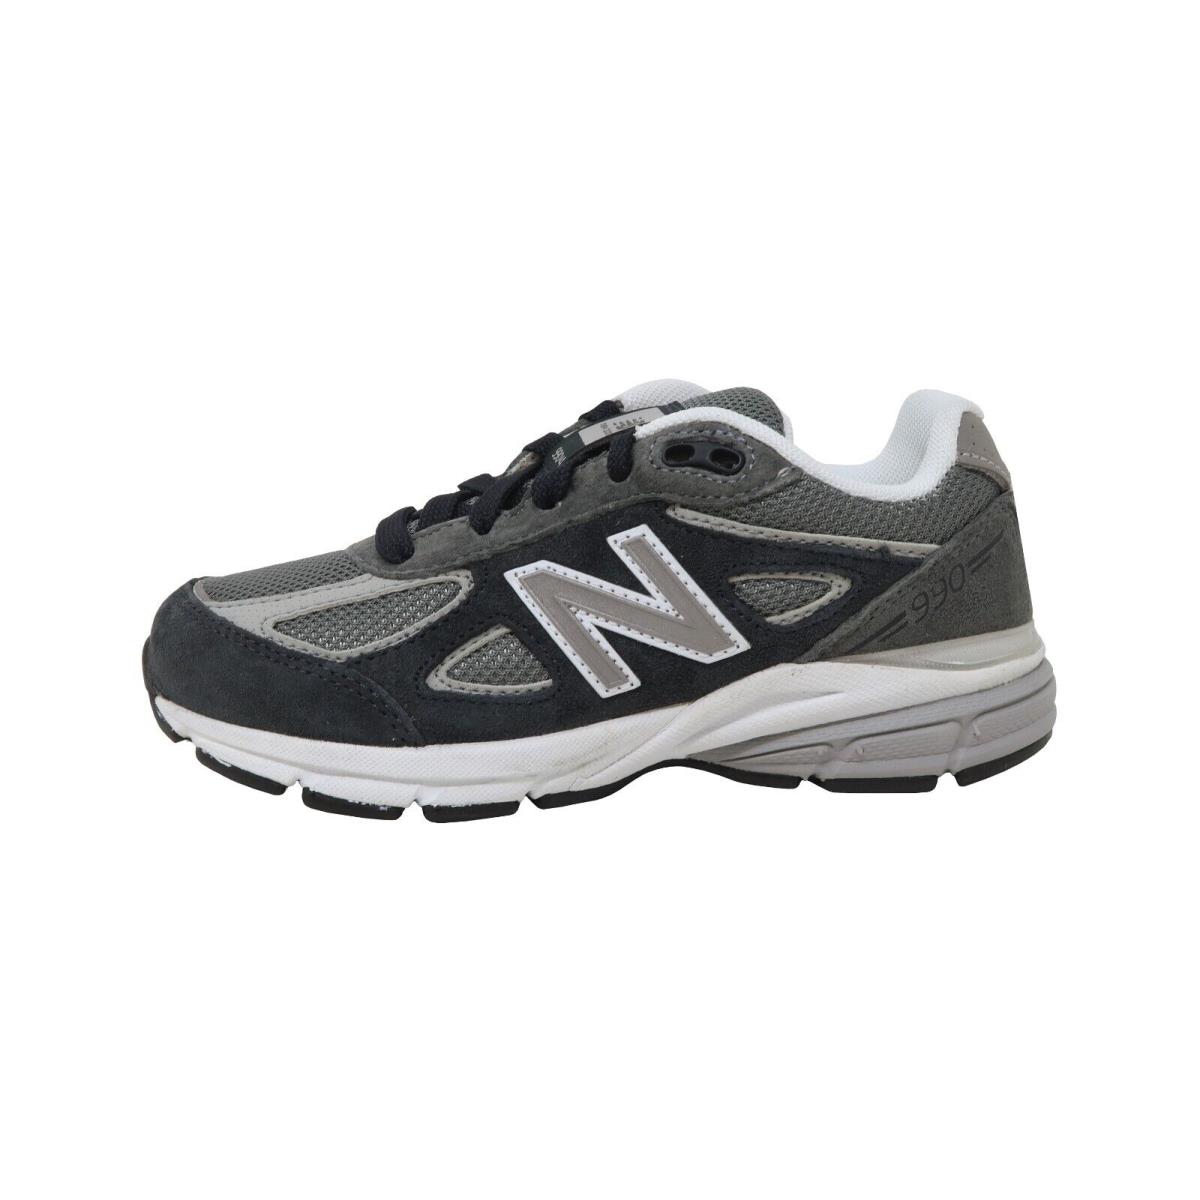 New Balance Little Kids 990 Running Shoes Sneakers KJ990CGP - Charcoal/navy - Gray